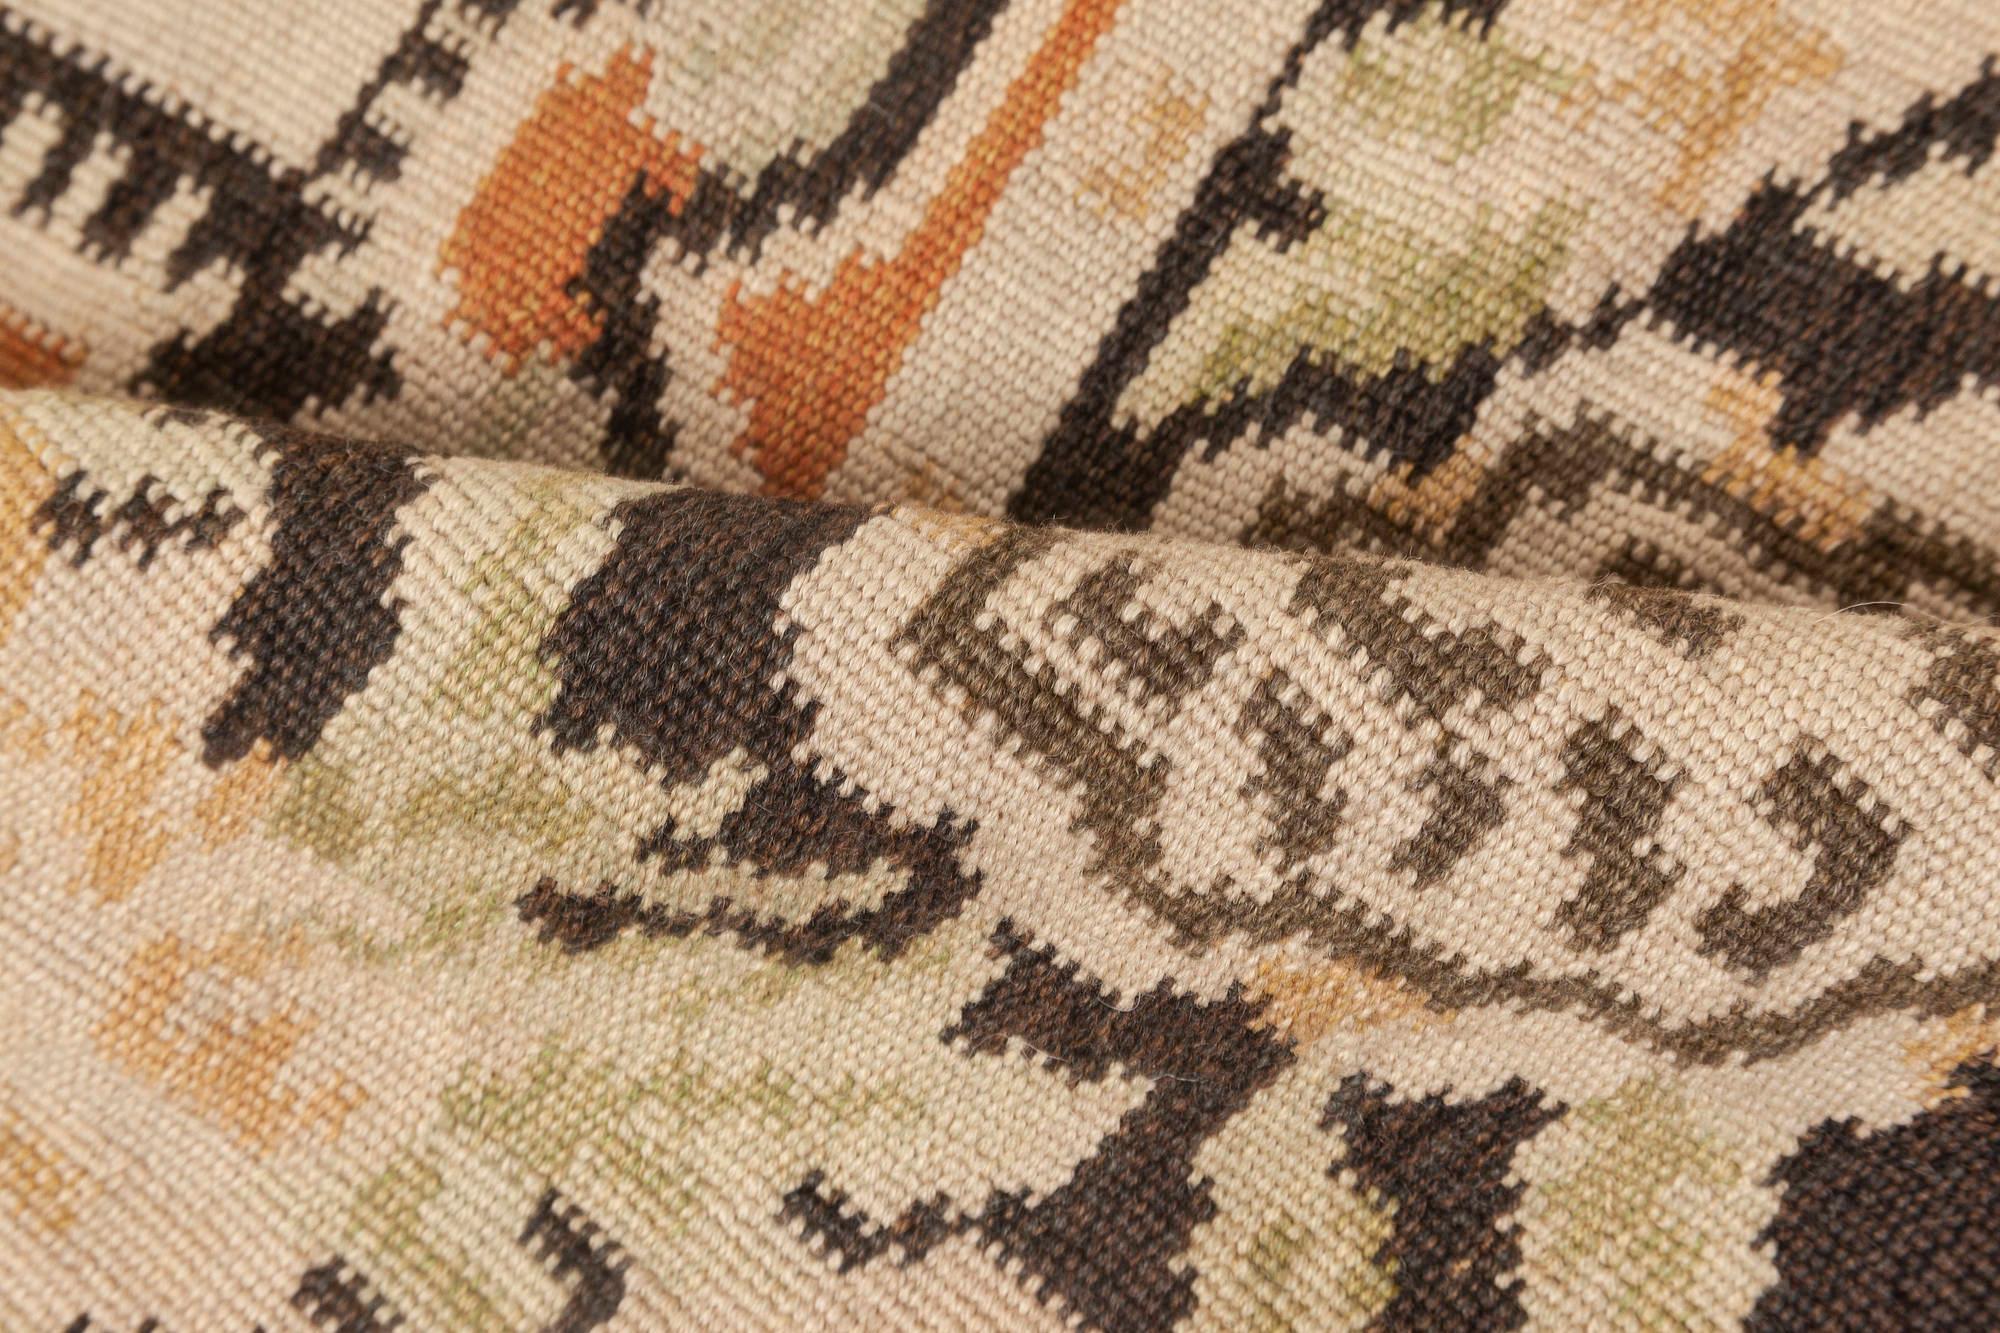 Modern Bassarabian Botanic design hand knotted wool rug by Doris Leslie Blau
Size: 13'0